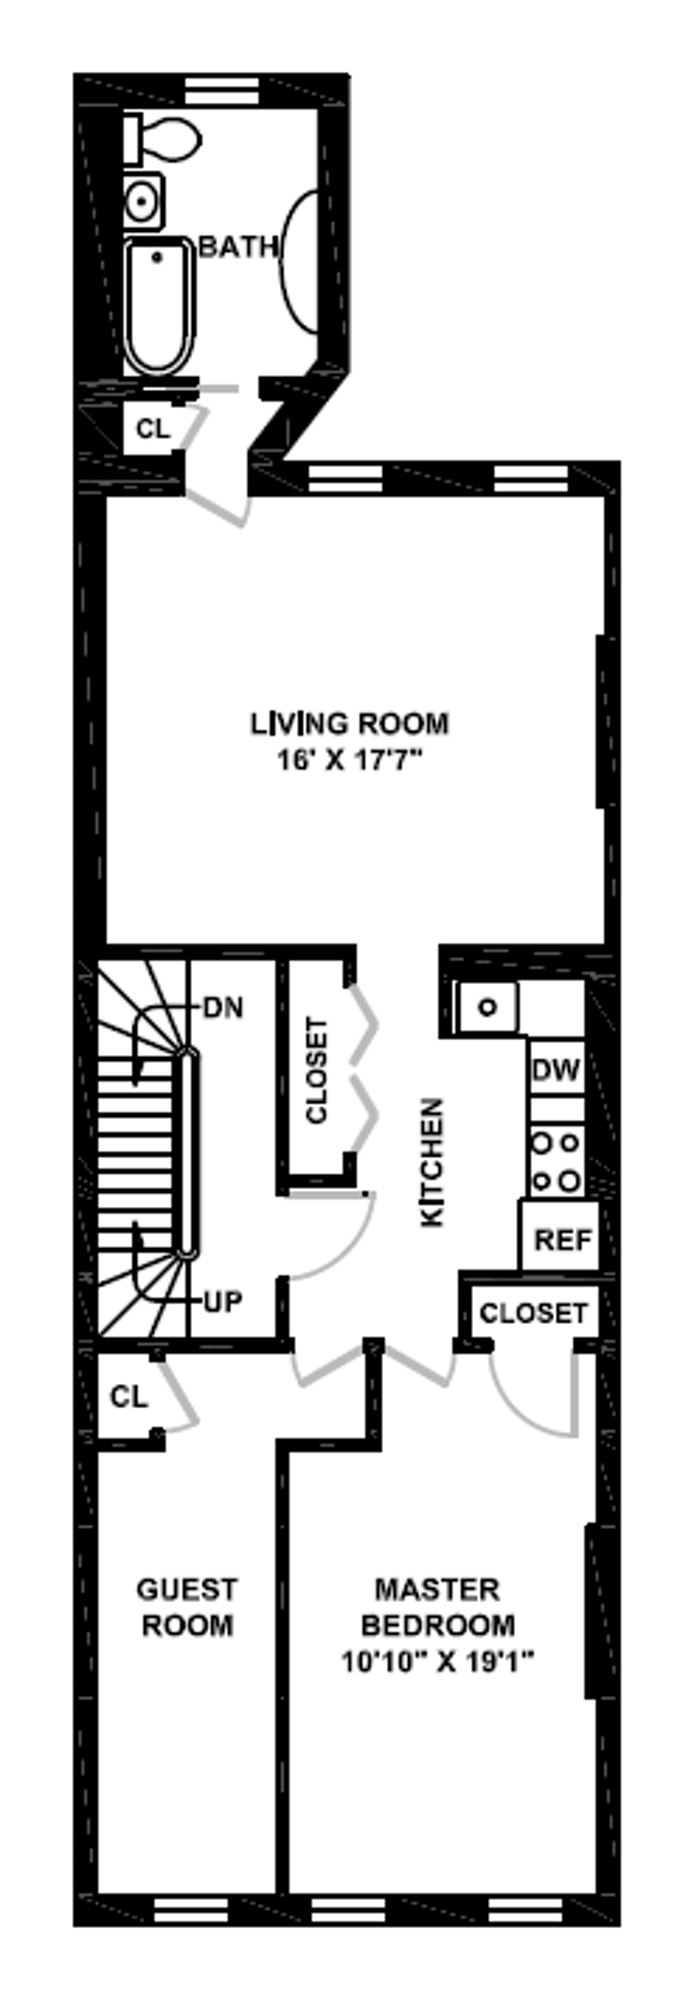 Floorplan for 152 West 122nd Street, 2